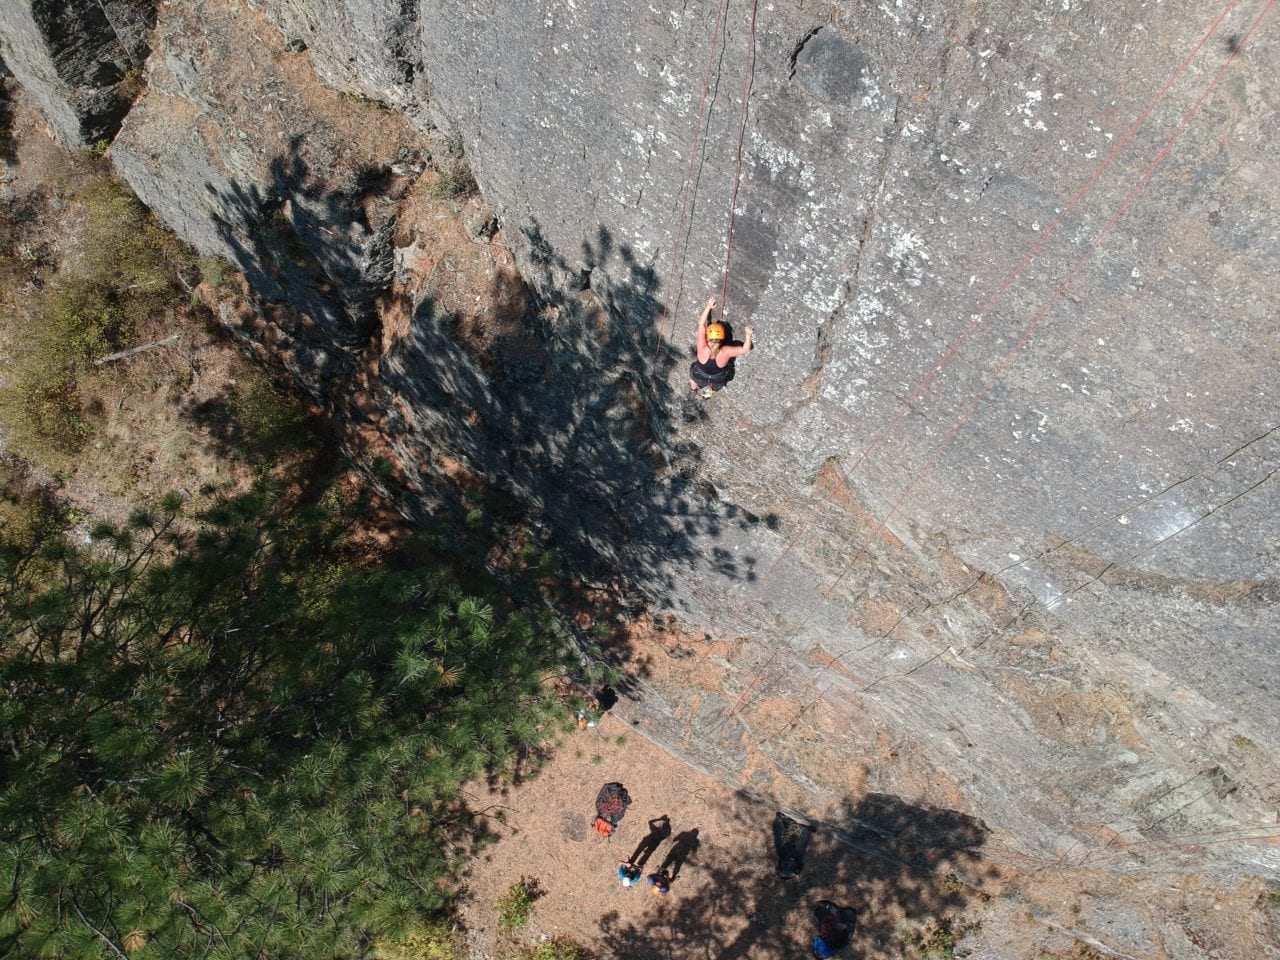 Rock Climb Montana via Dan Hansen